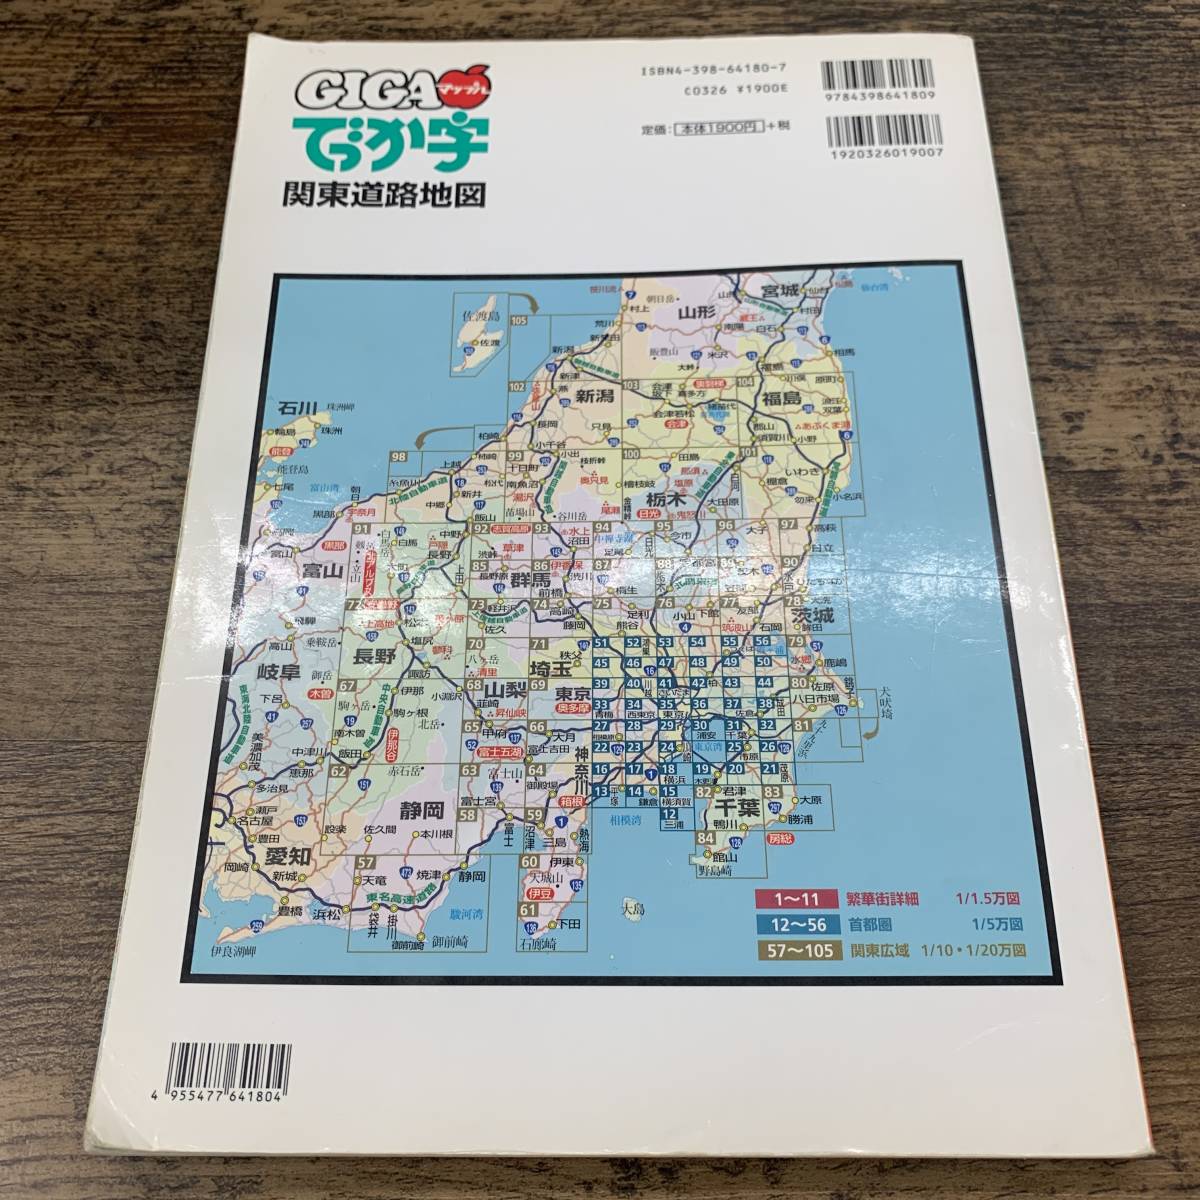 G-8966でっか字 関東 1版第16刷 GIGAマップル昭文社2005年1月発行 甲信越 福島 道路地図 静岡 高質 道路地図